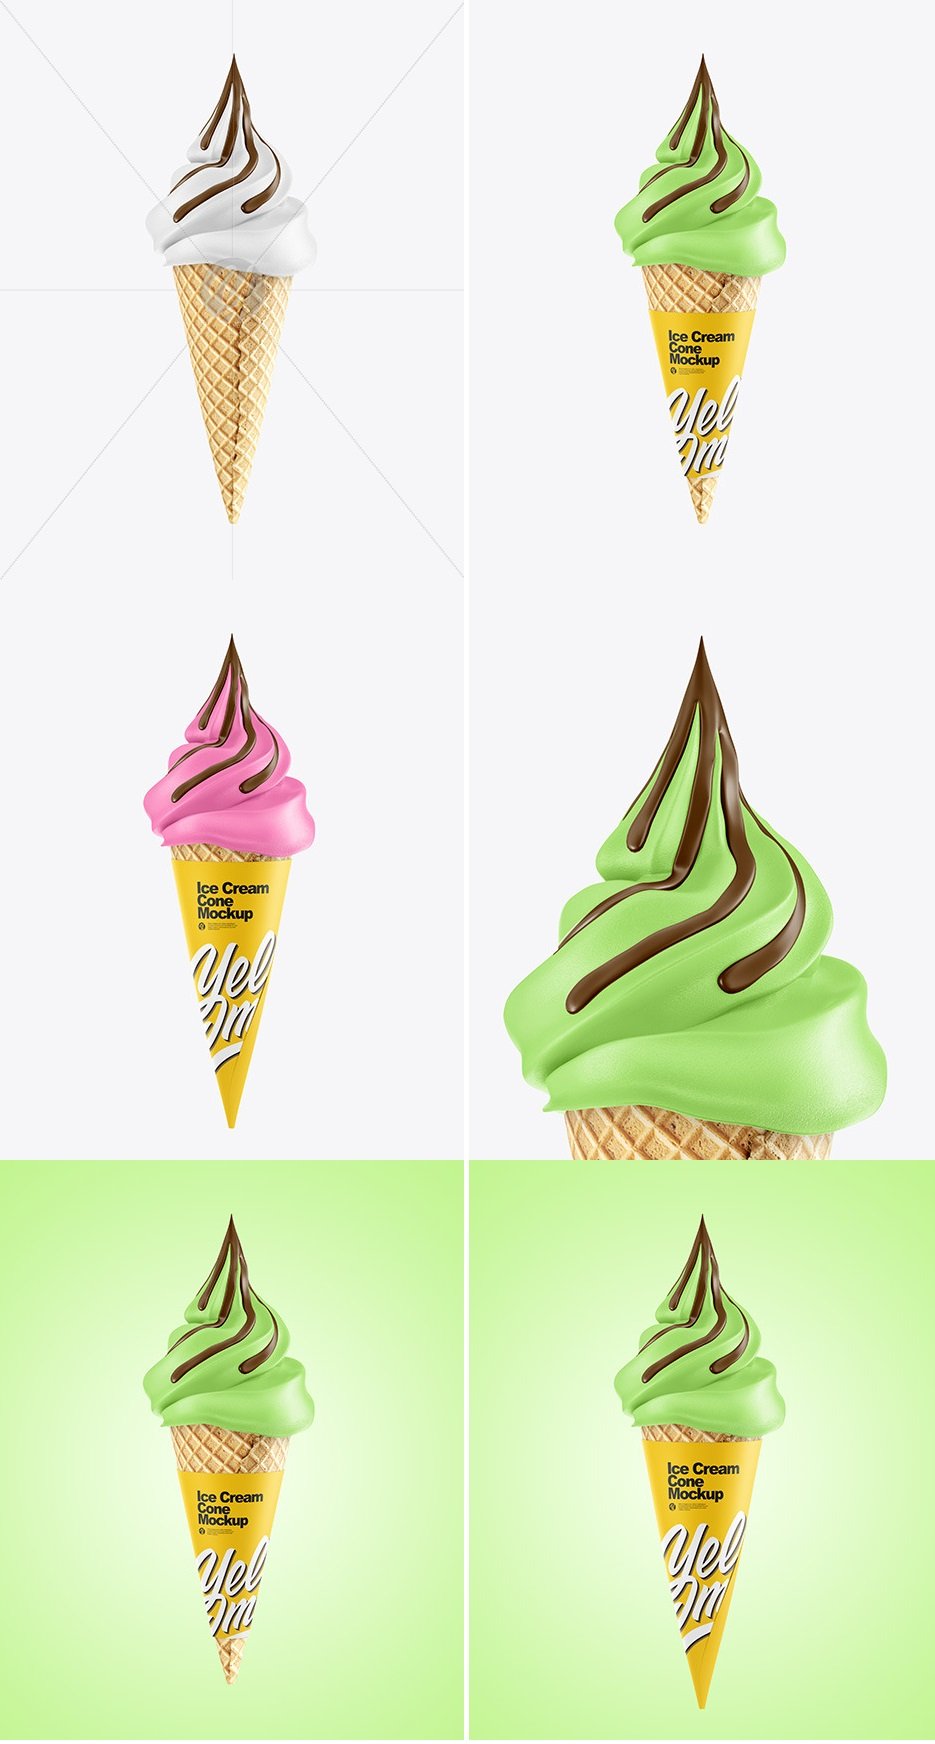 Download Download Ice Cream Cone Mockup 58670 - SoftArchive